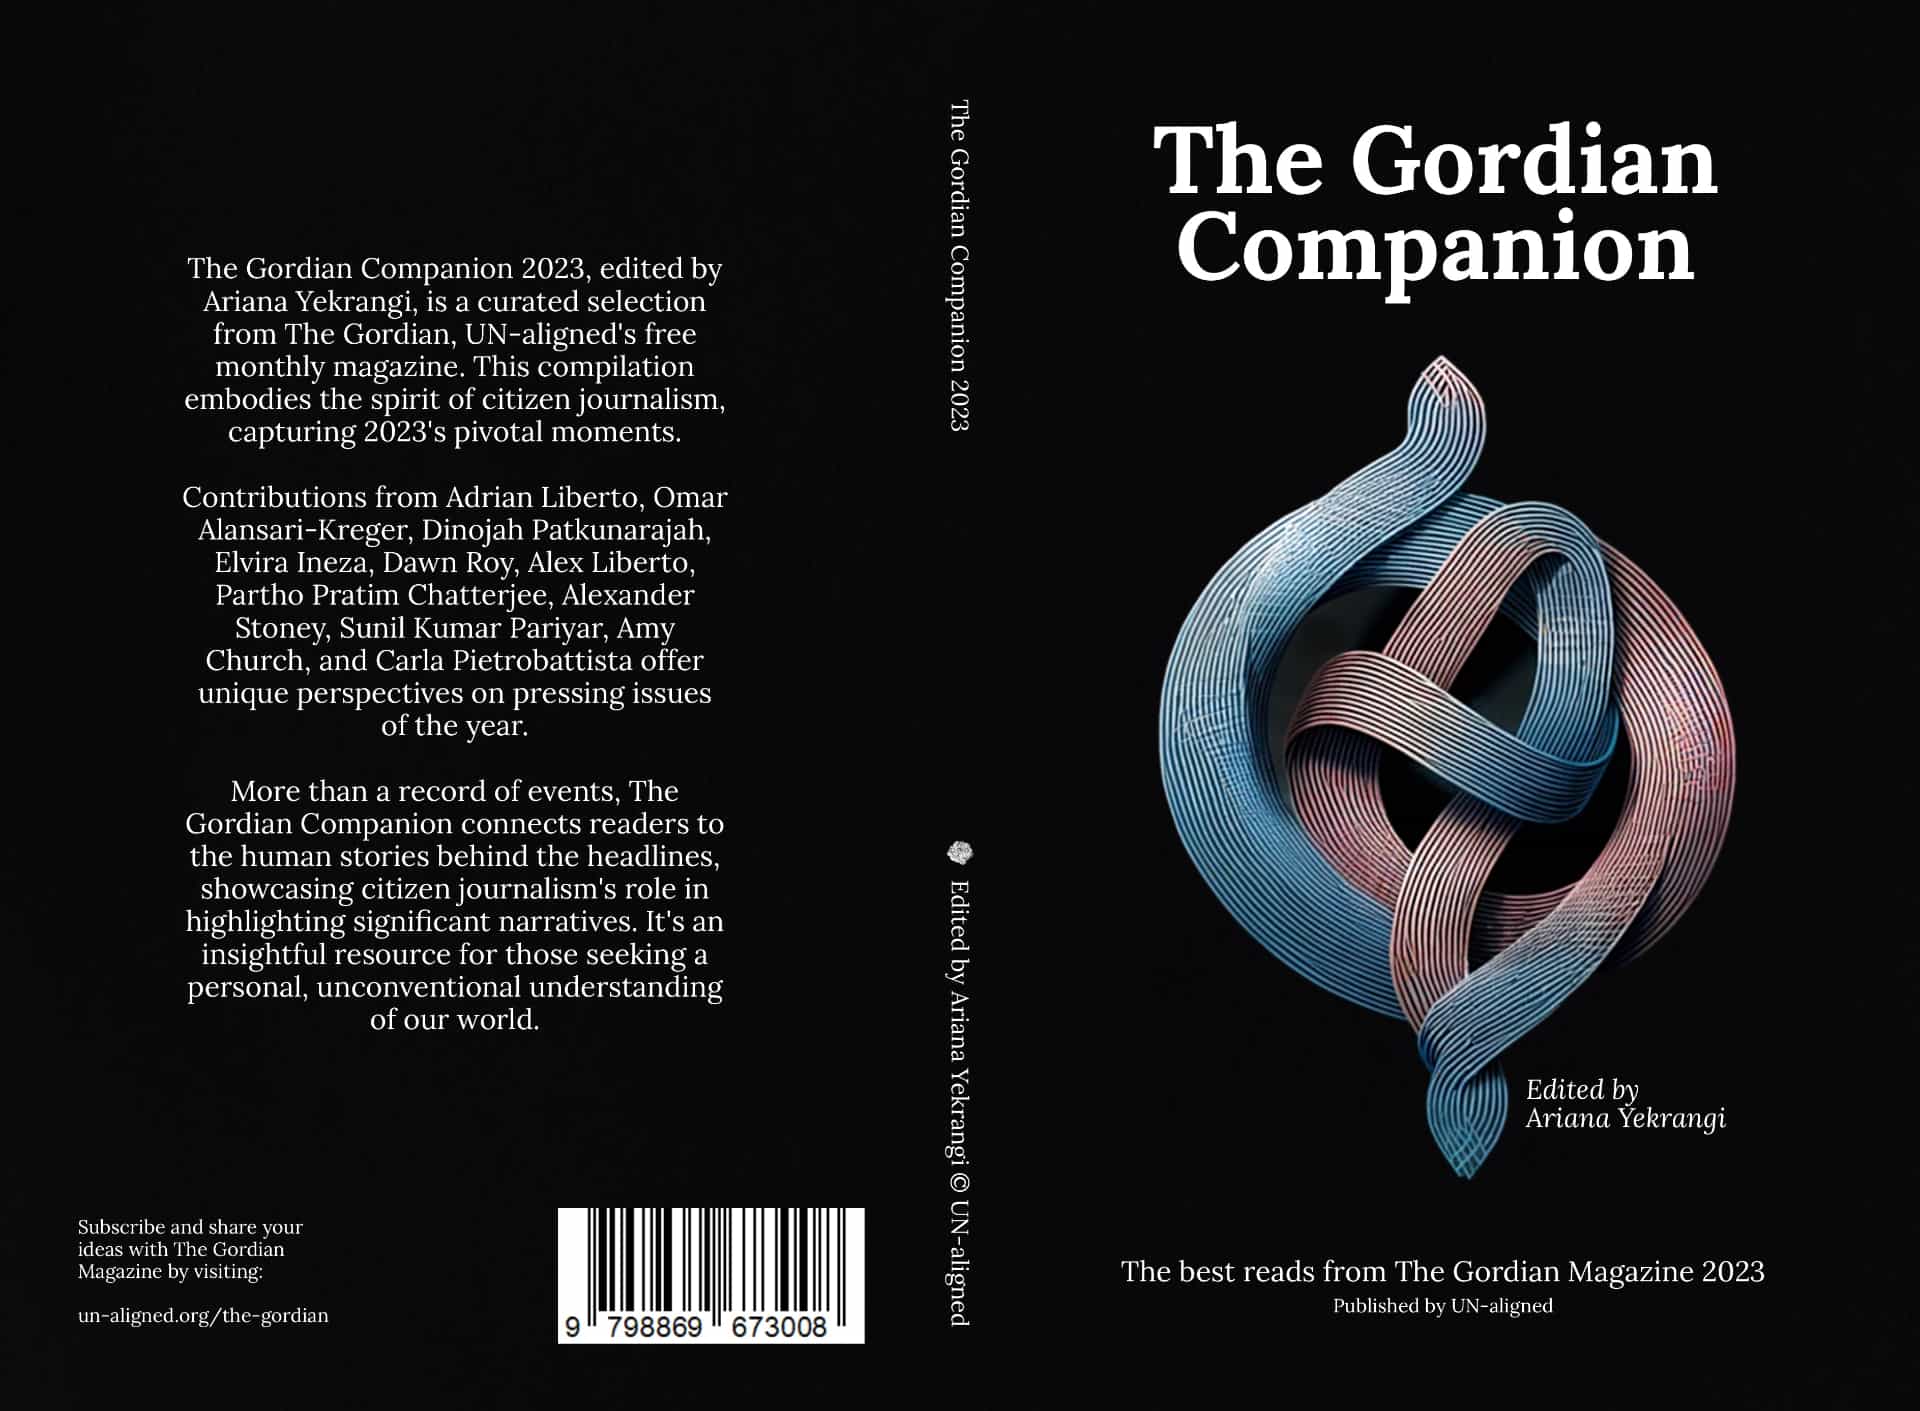 The Gordian Companion 2023 book cover. Graphic and design: Ariana Yekrangi